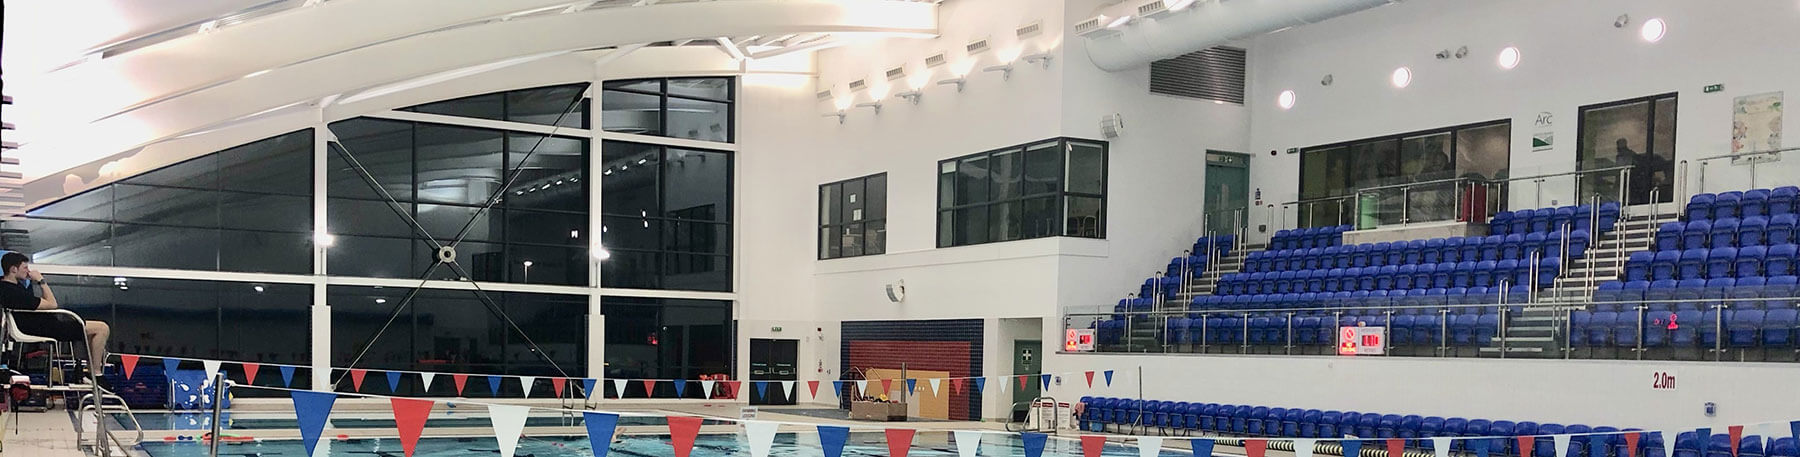 ARC Leisure Centre Matlock swimming pool hall led lights saving energy